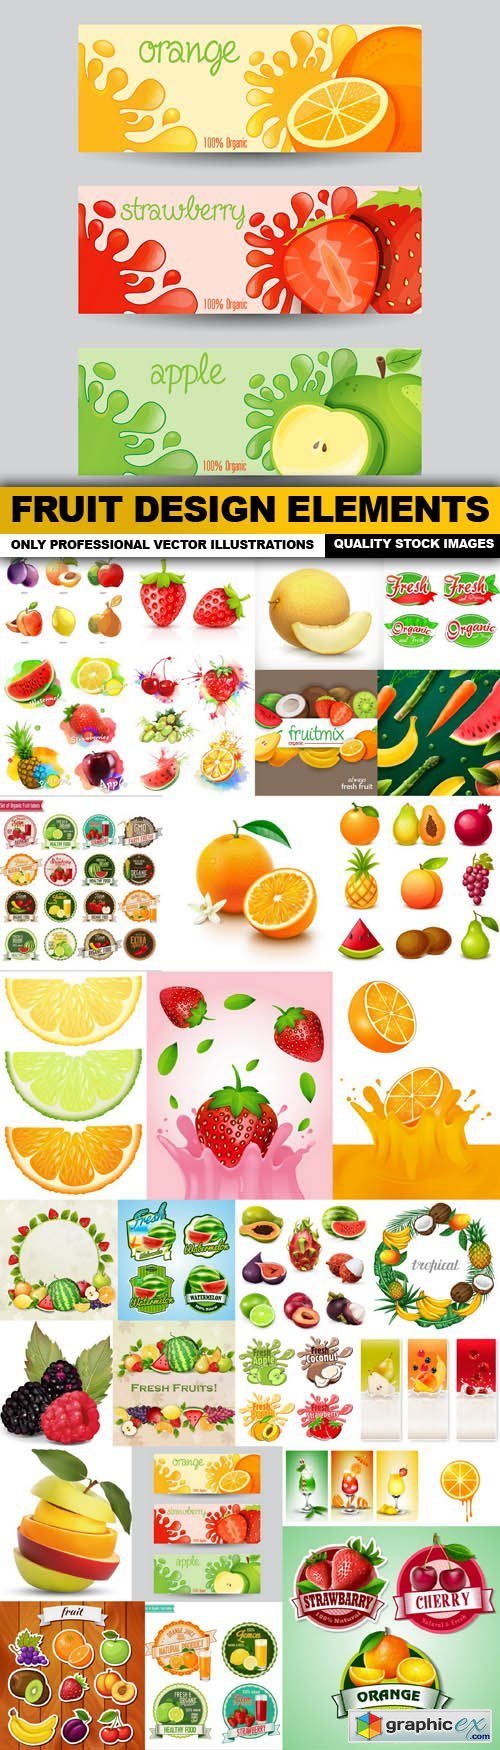 Fruit Design Elements